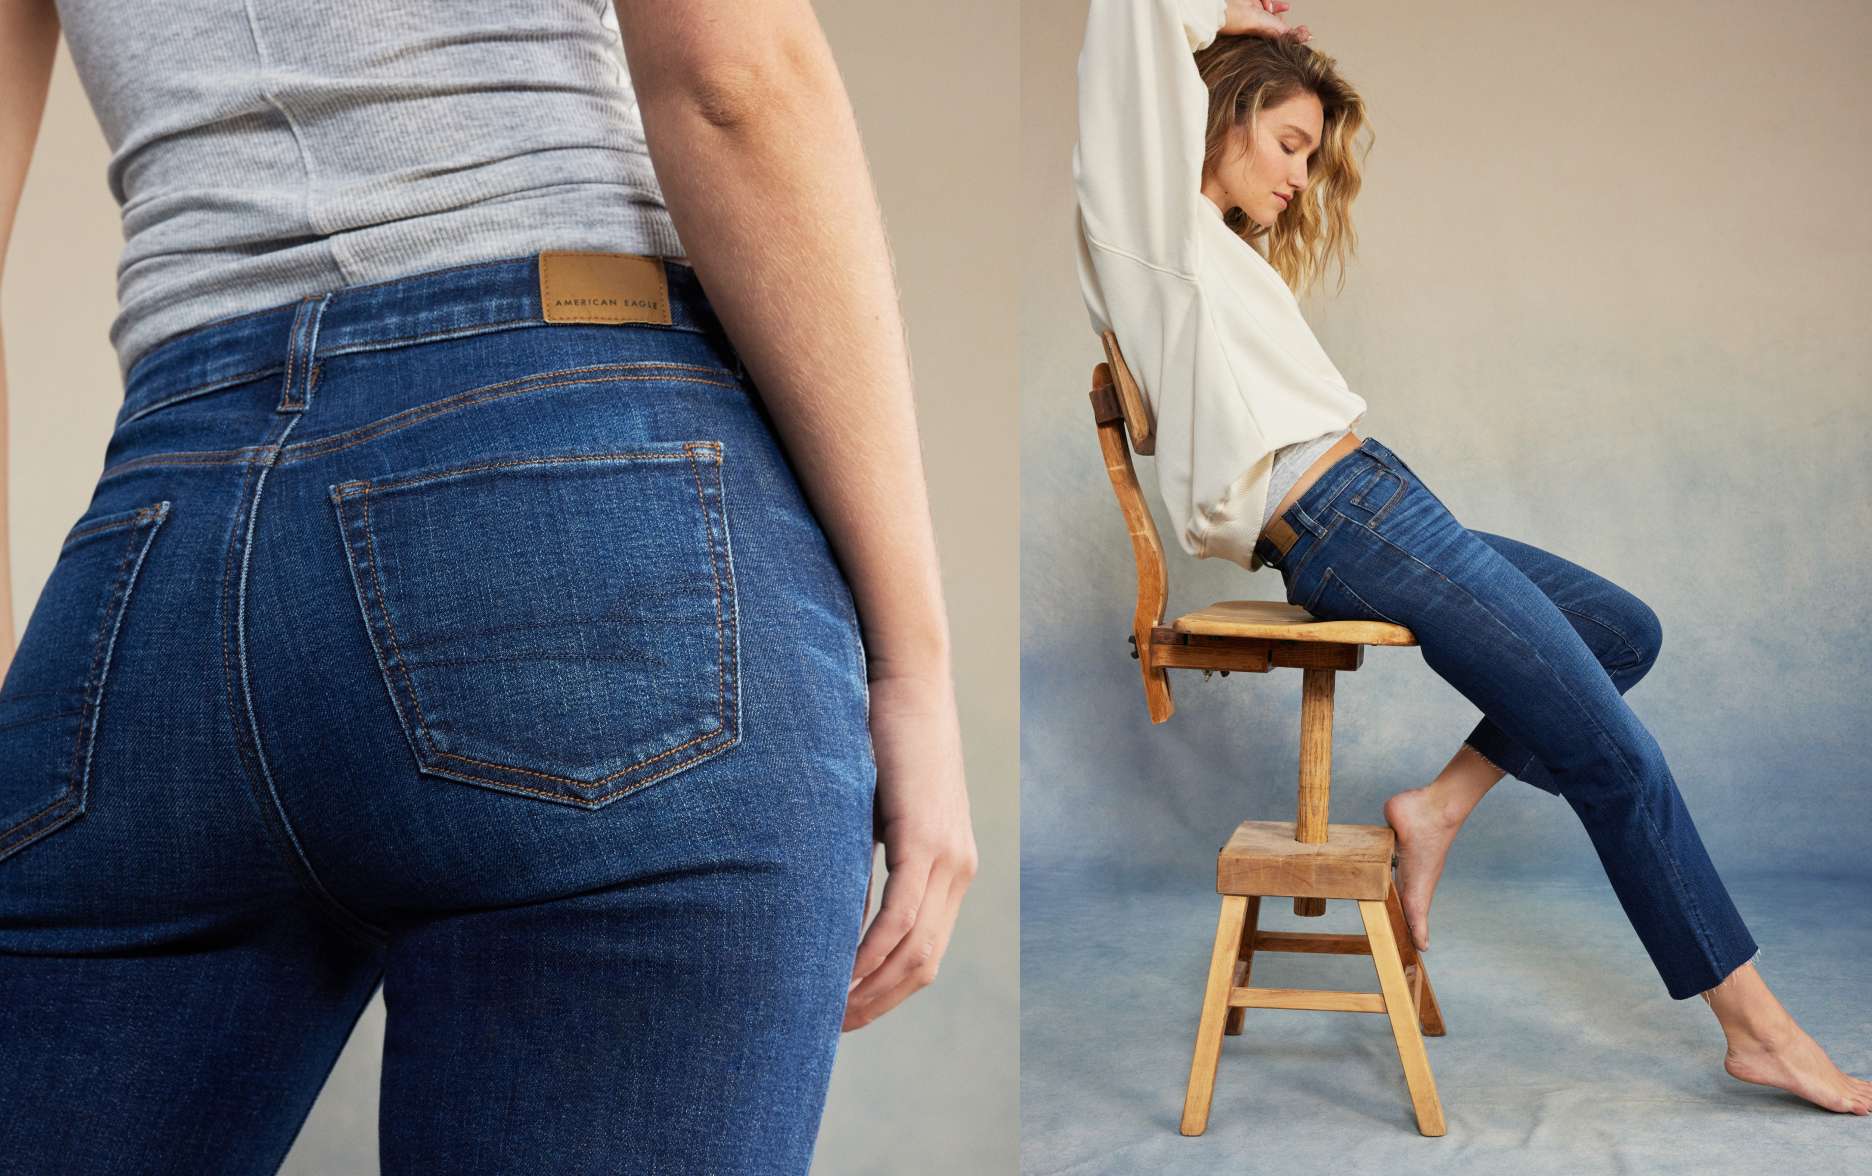 American Eagle Womens Artist Crop Jeans Stretch 100%Cotton High Rise B